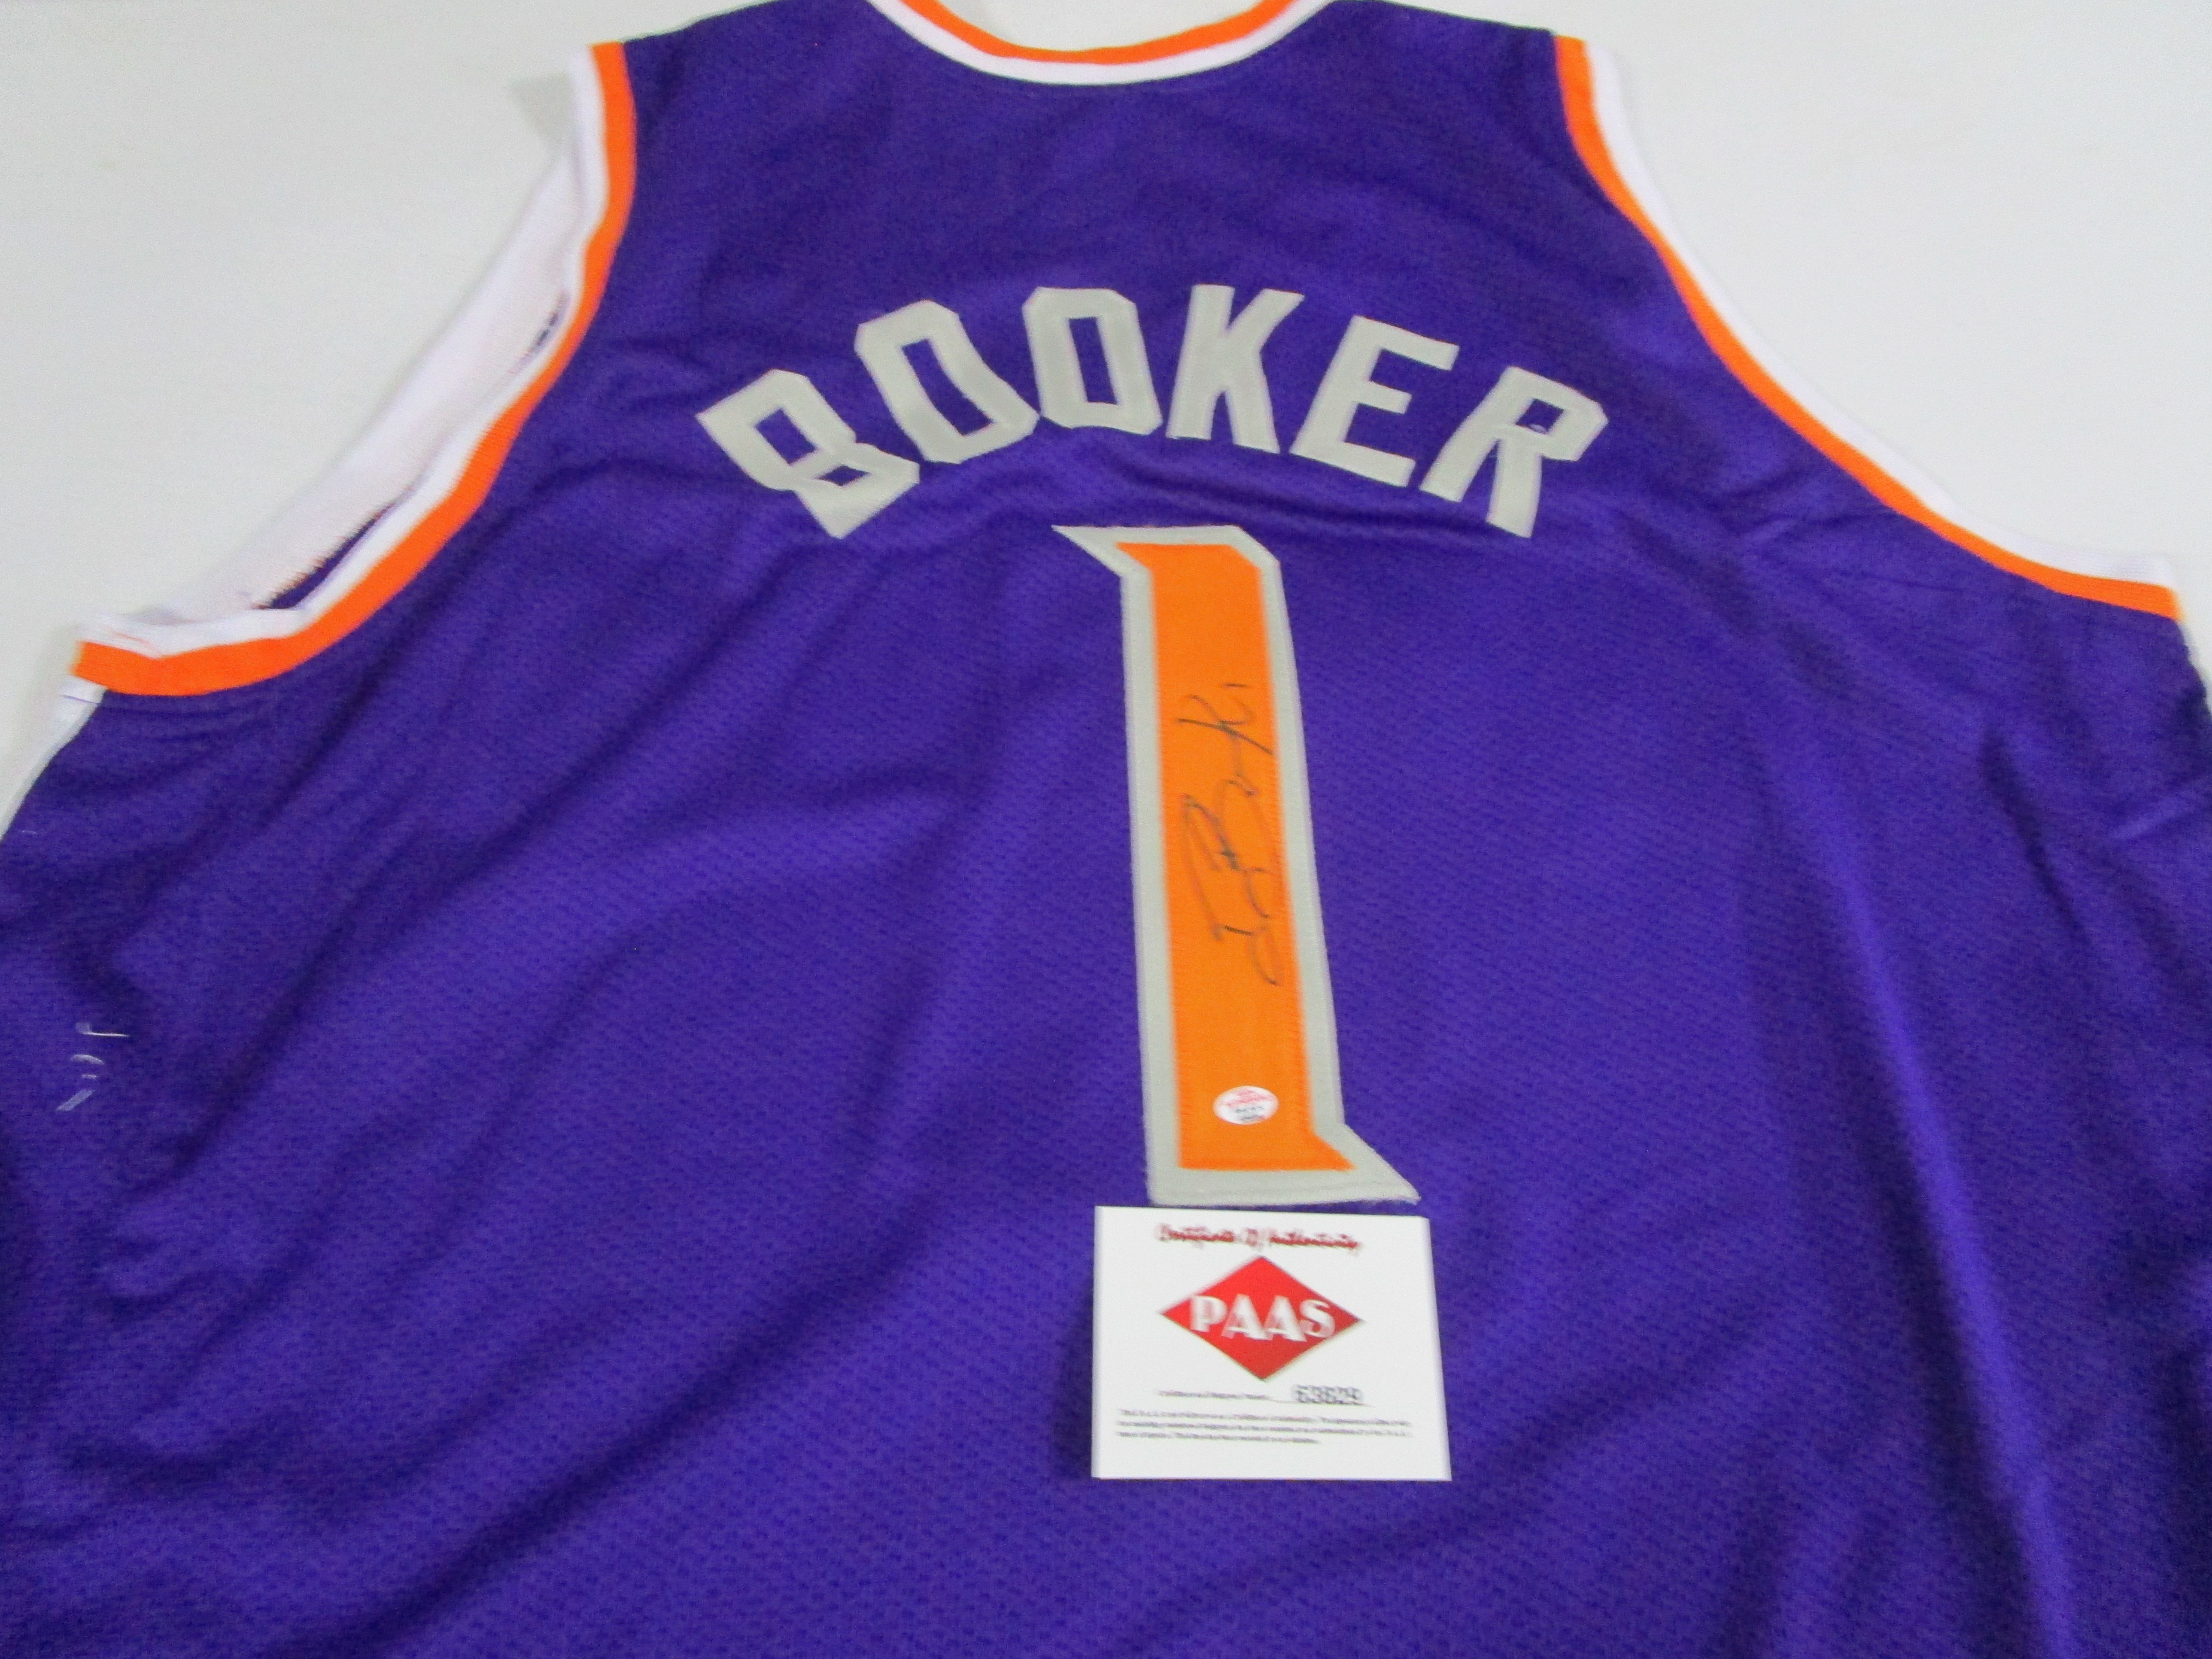 Devin Booker Signed Phoenix Suns Jersey